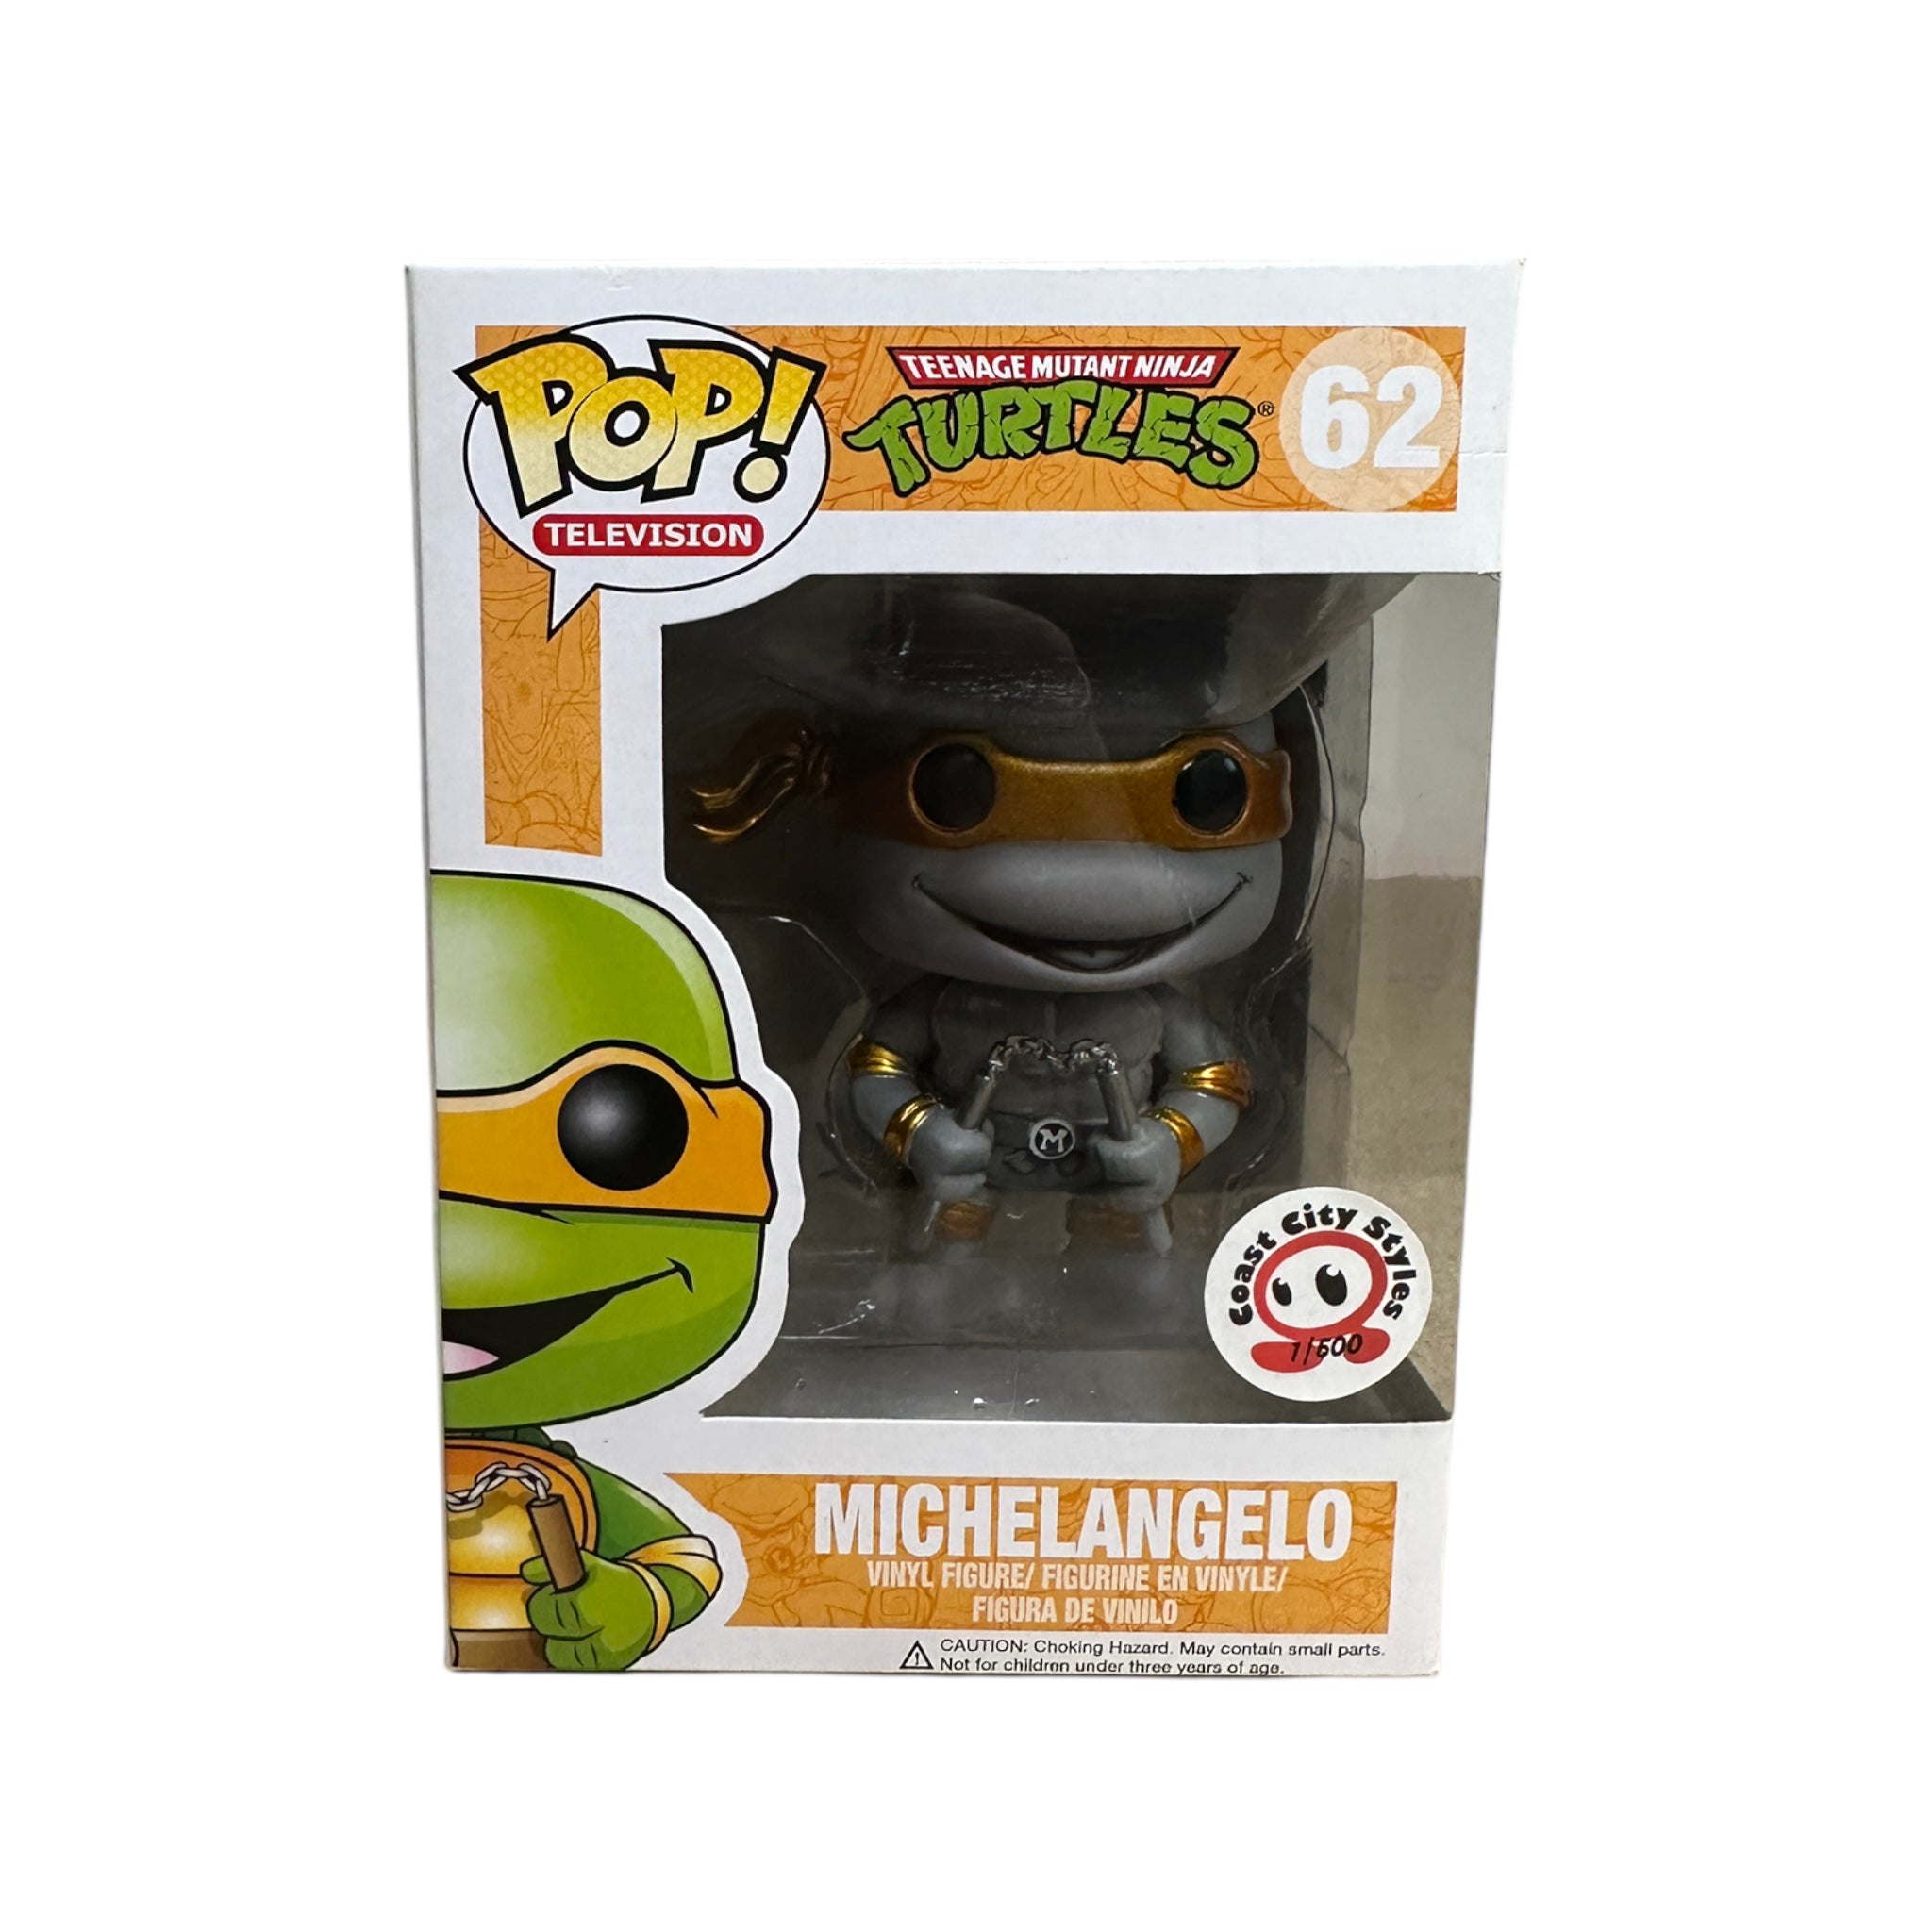 Michelangelo #62 (Grayscale Metallic) Funko Pop! - Teenage Mutant Ninja Turtles - Coast City Styles Exclusive LE500 Pcs - Condition 8.5/10